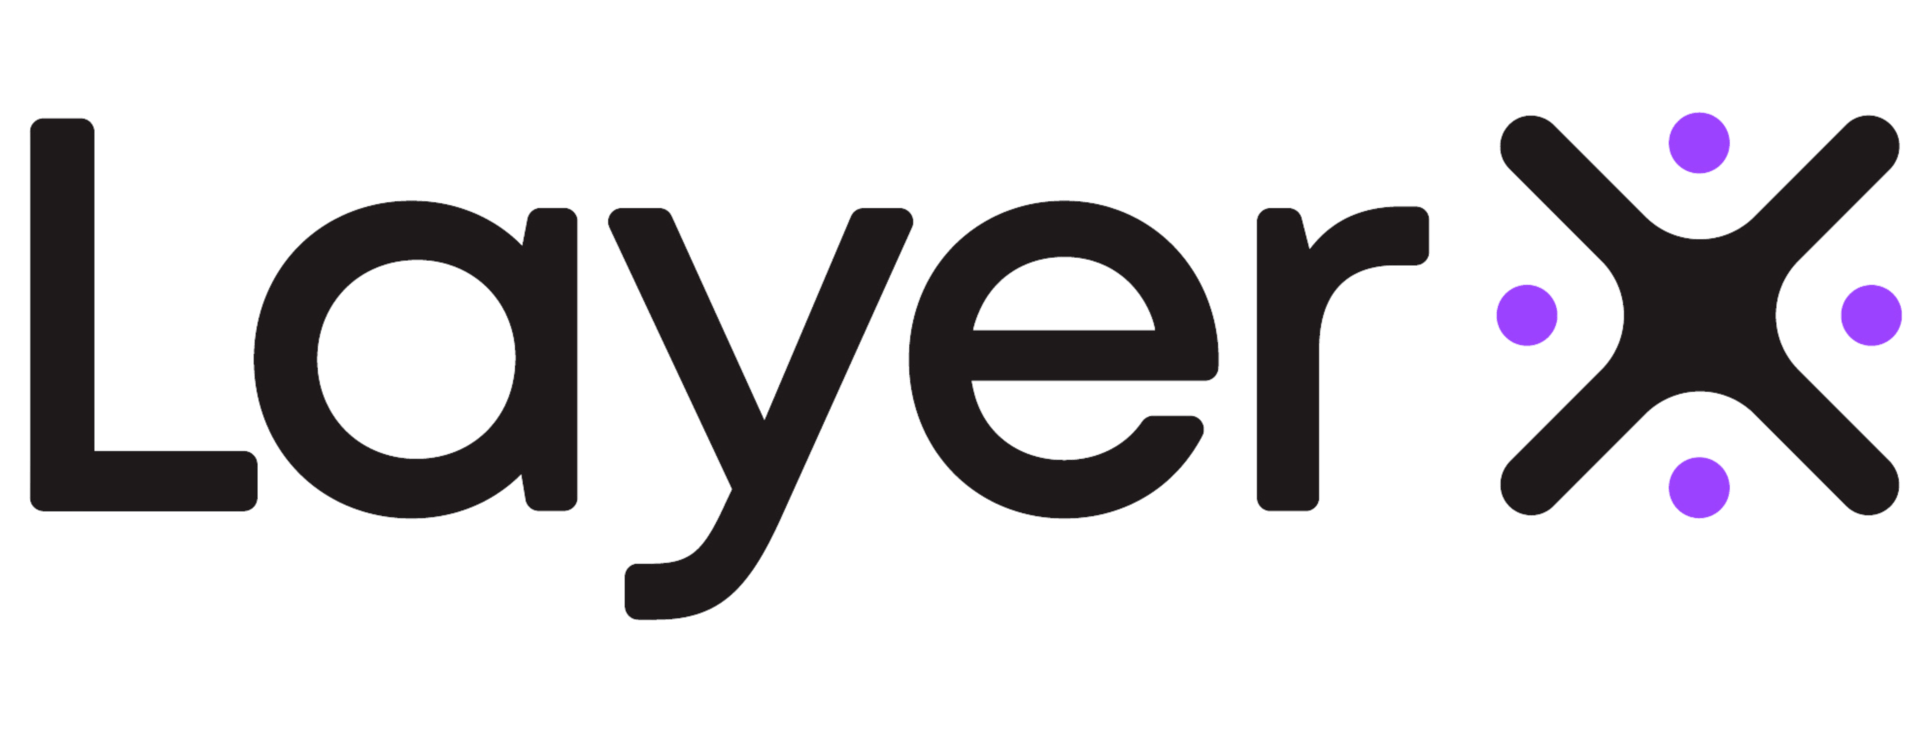 LayerX Security logo